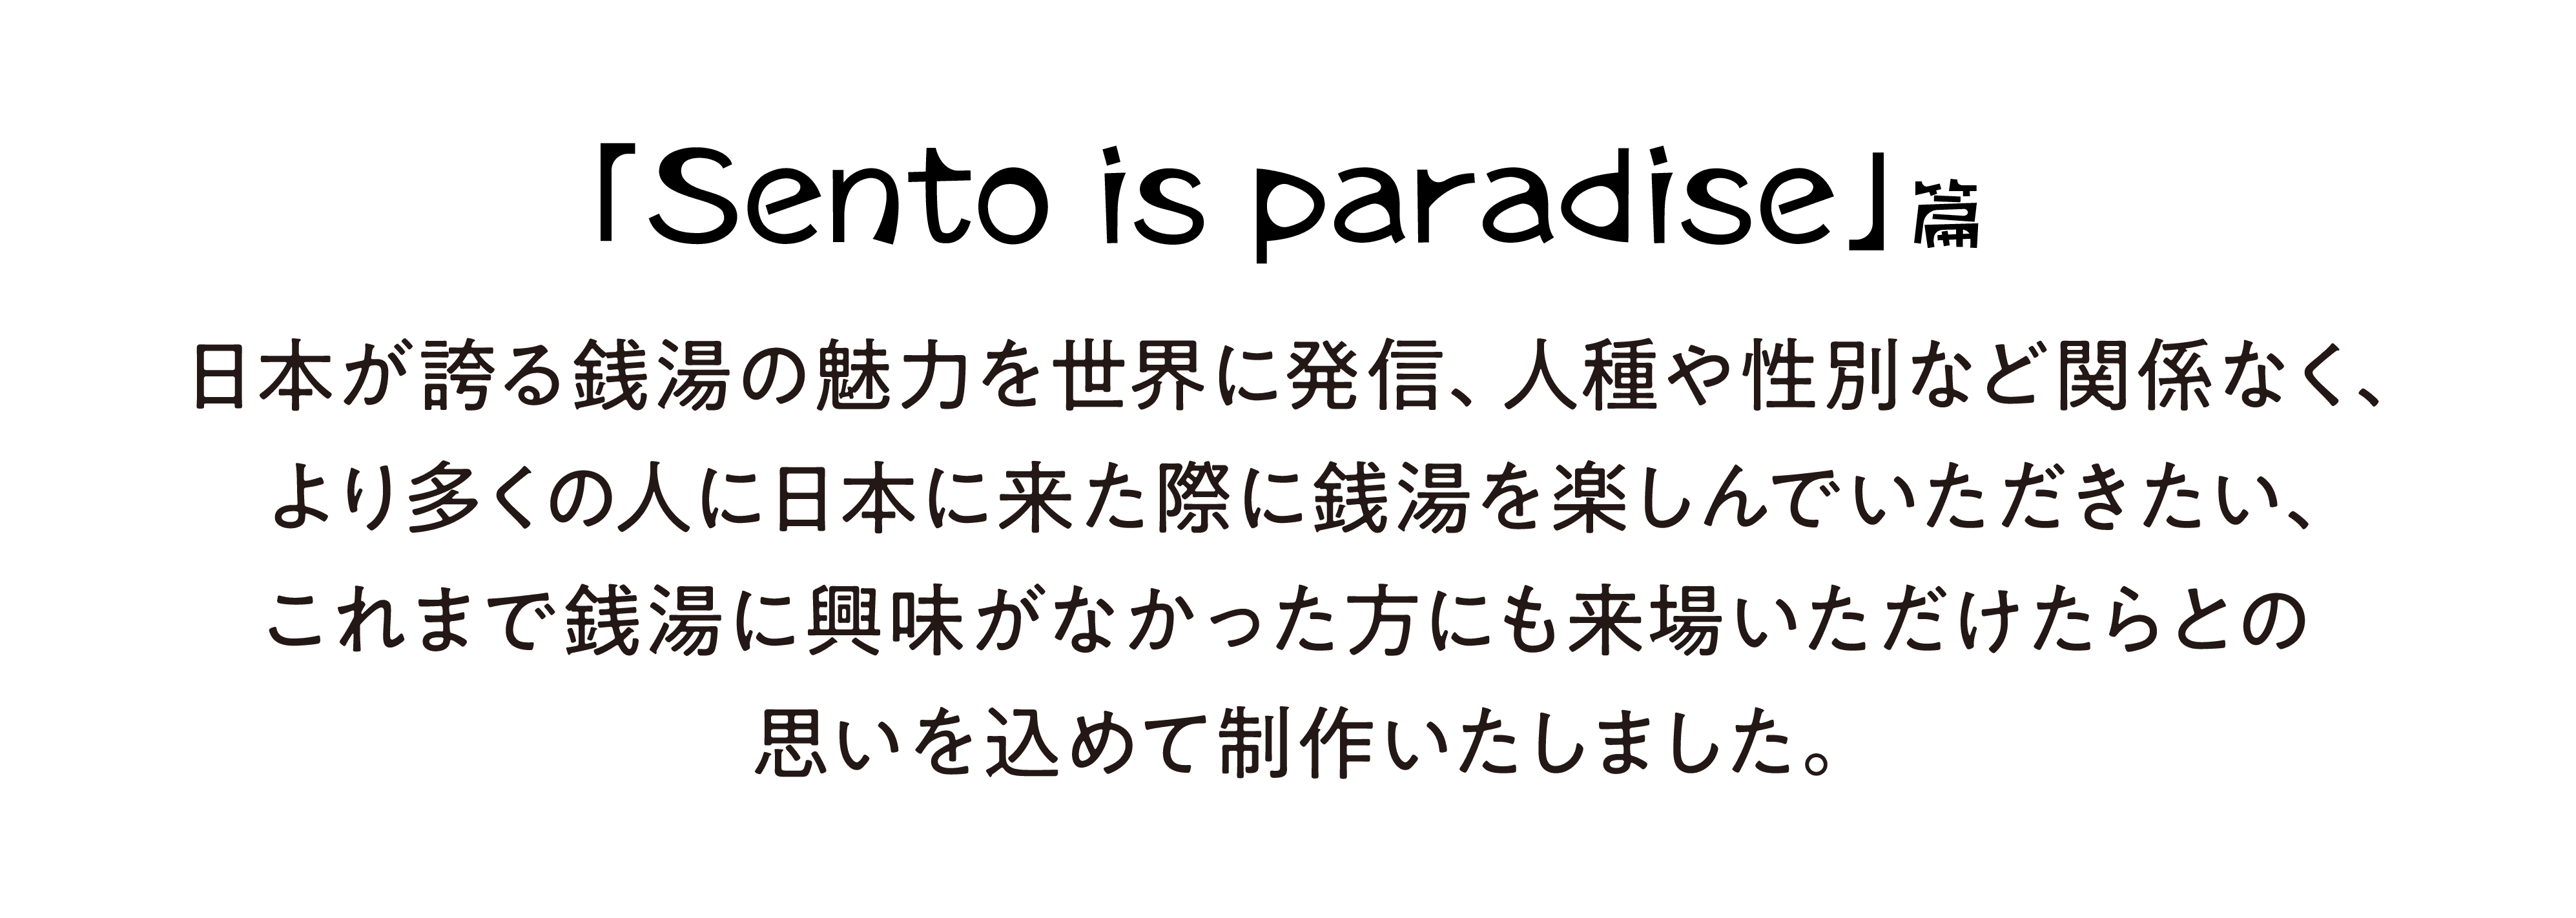 「Sento is paradise」 篇